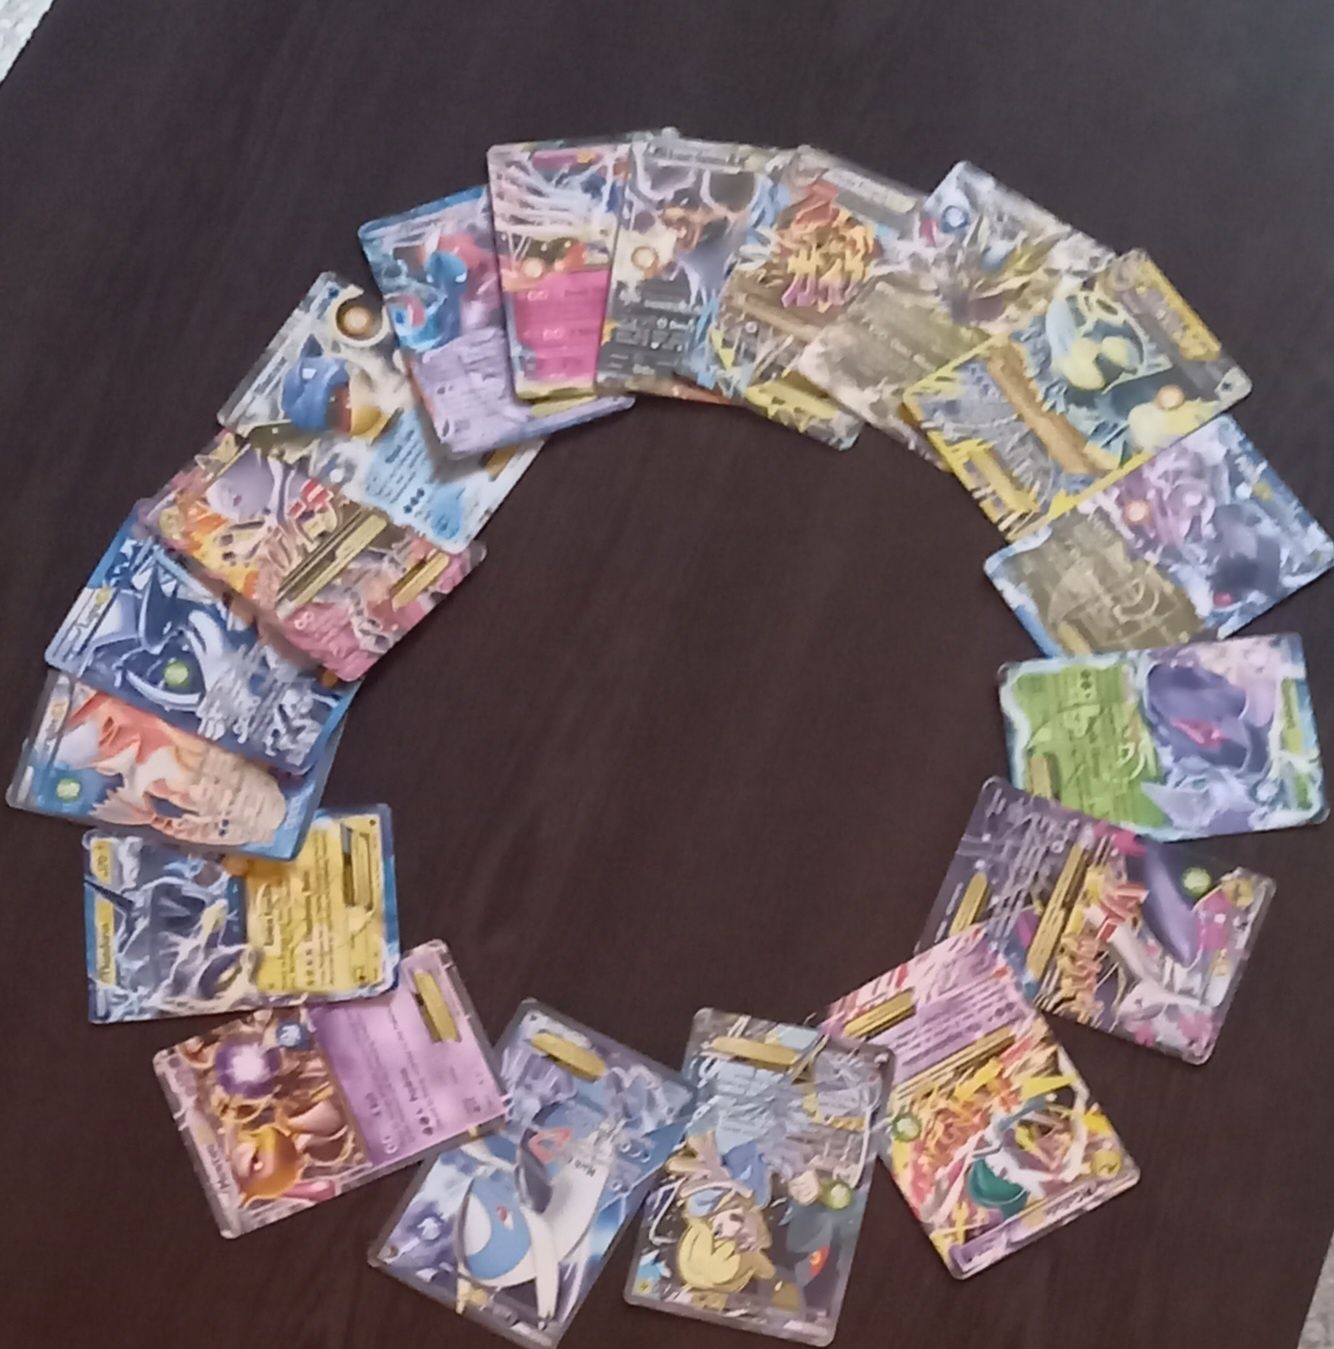 Karty pokemon 2019 18 sztuk polecam